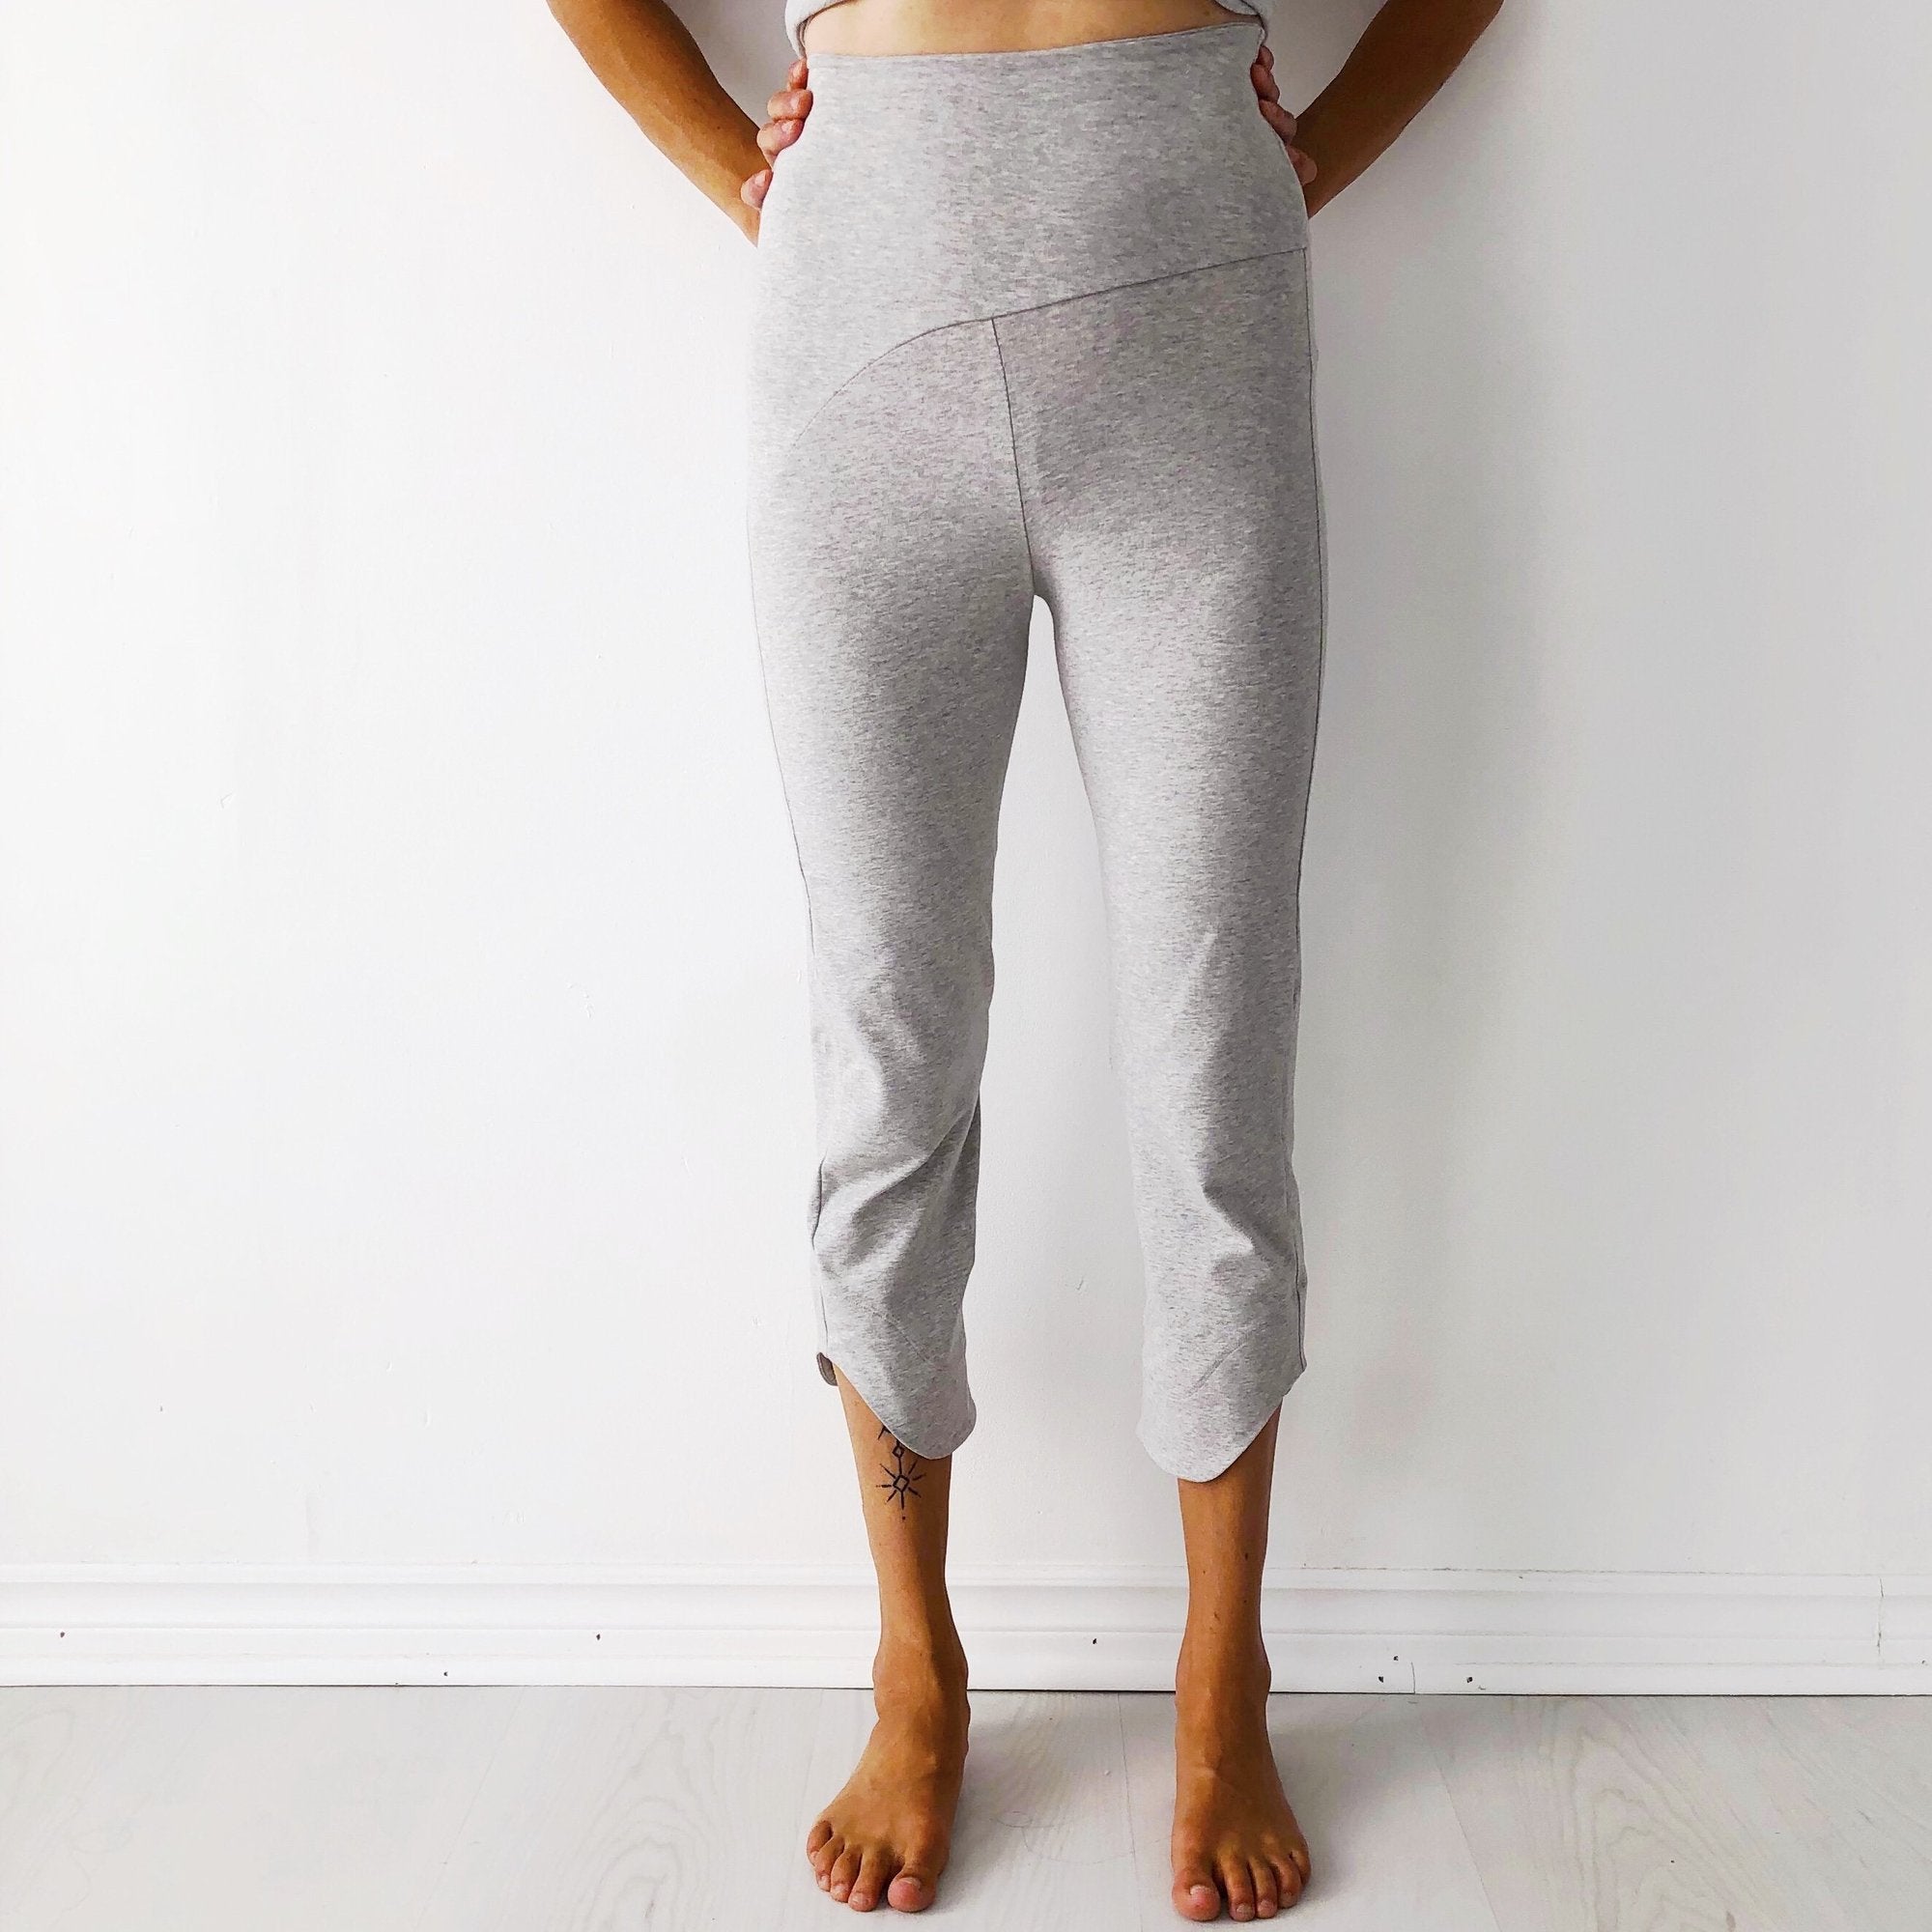 Urban Zen Legging, Shop Synergy Organic Pants